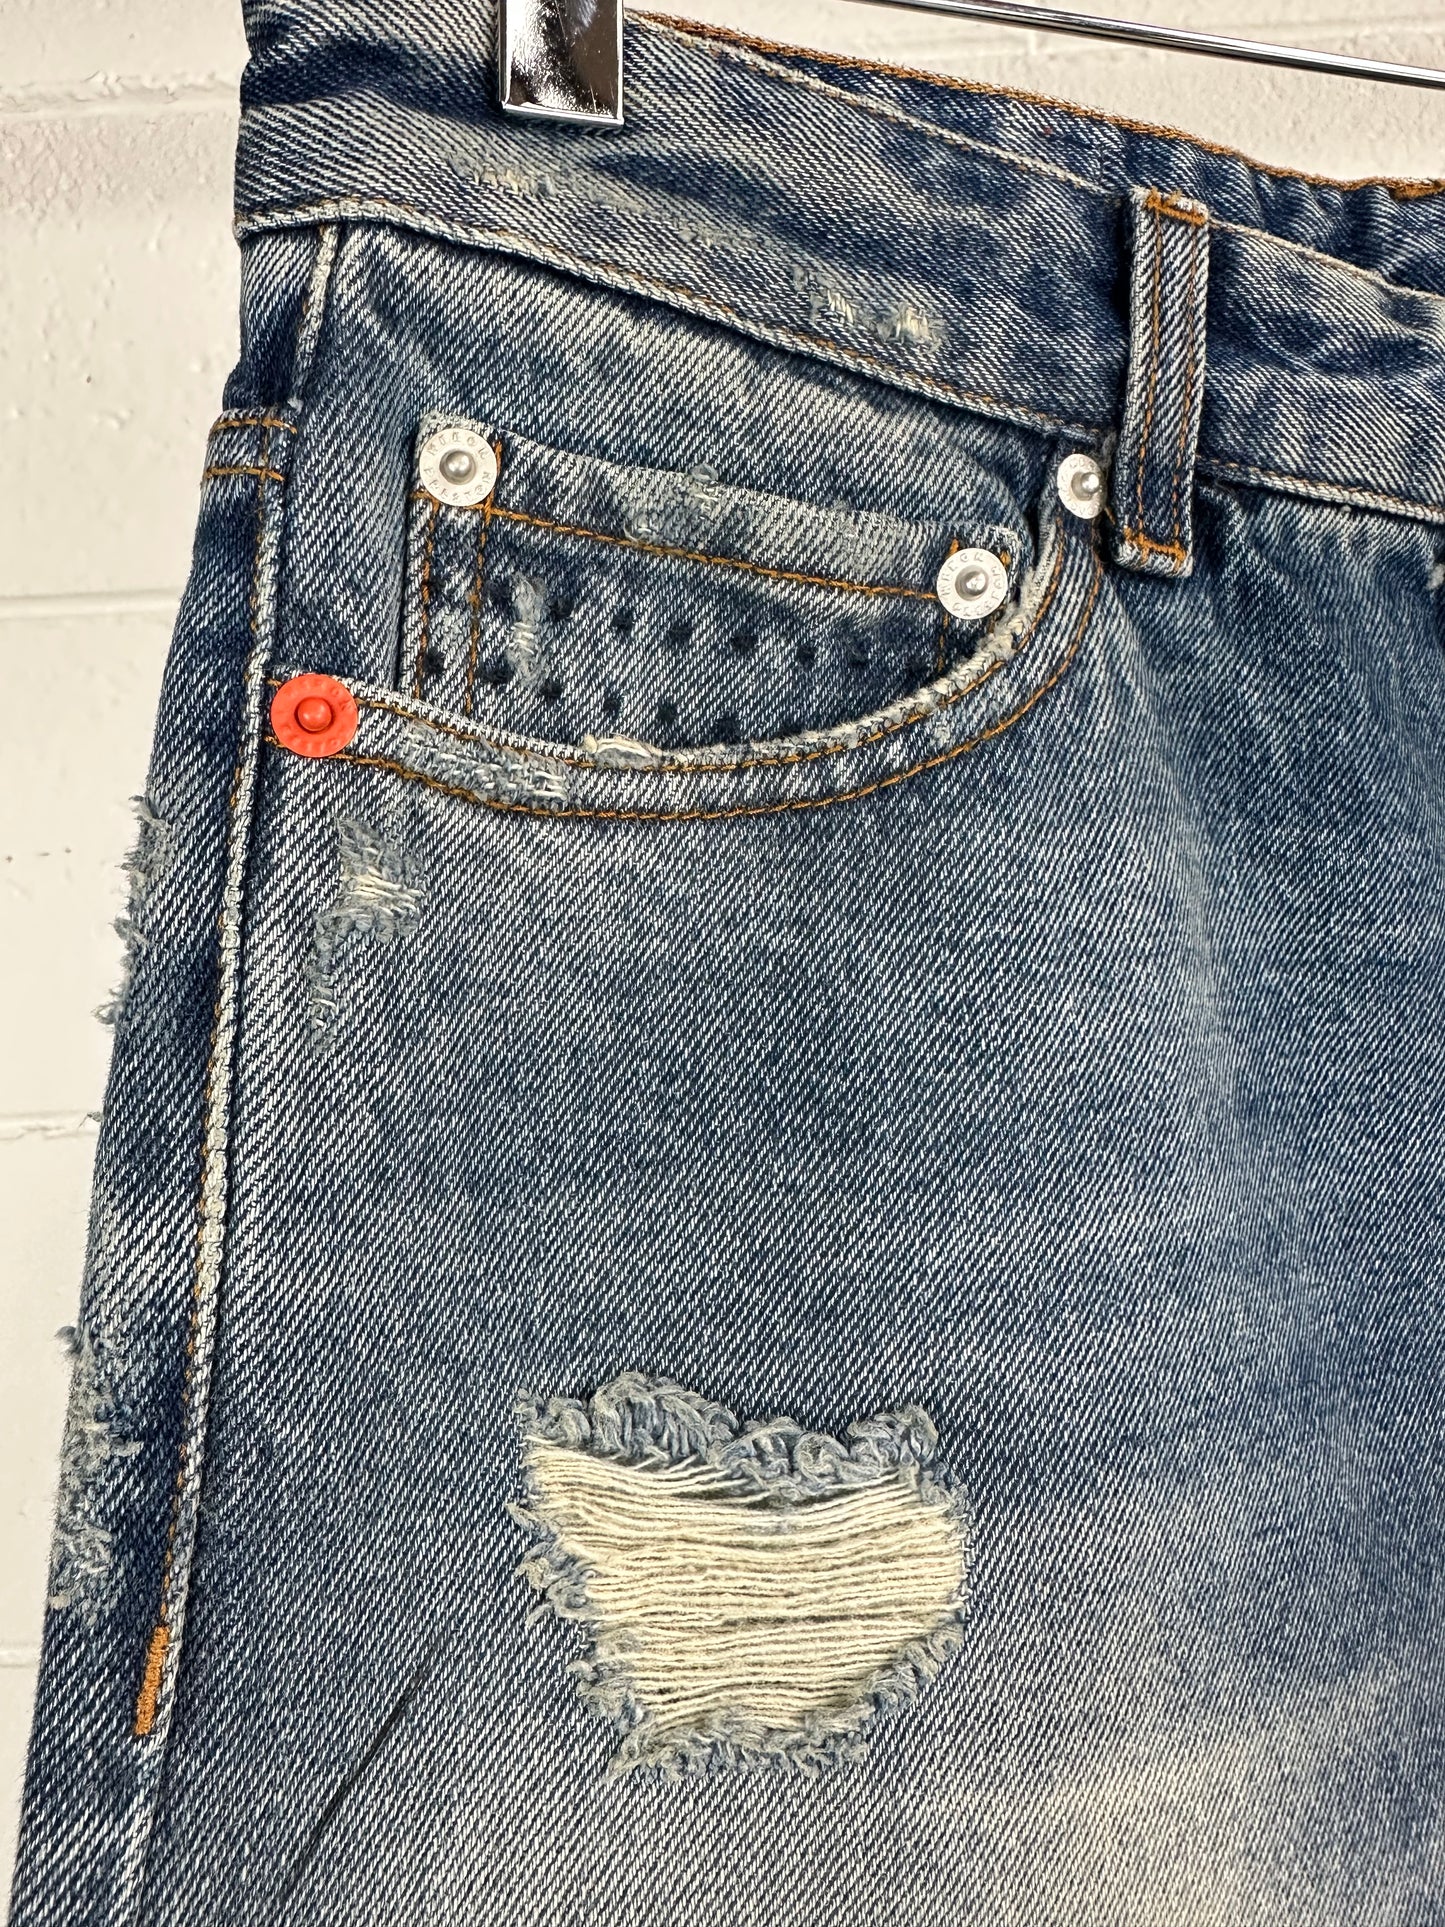 Distressed Vintage Jeans